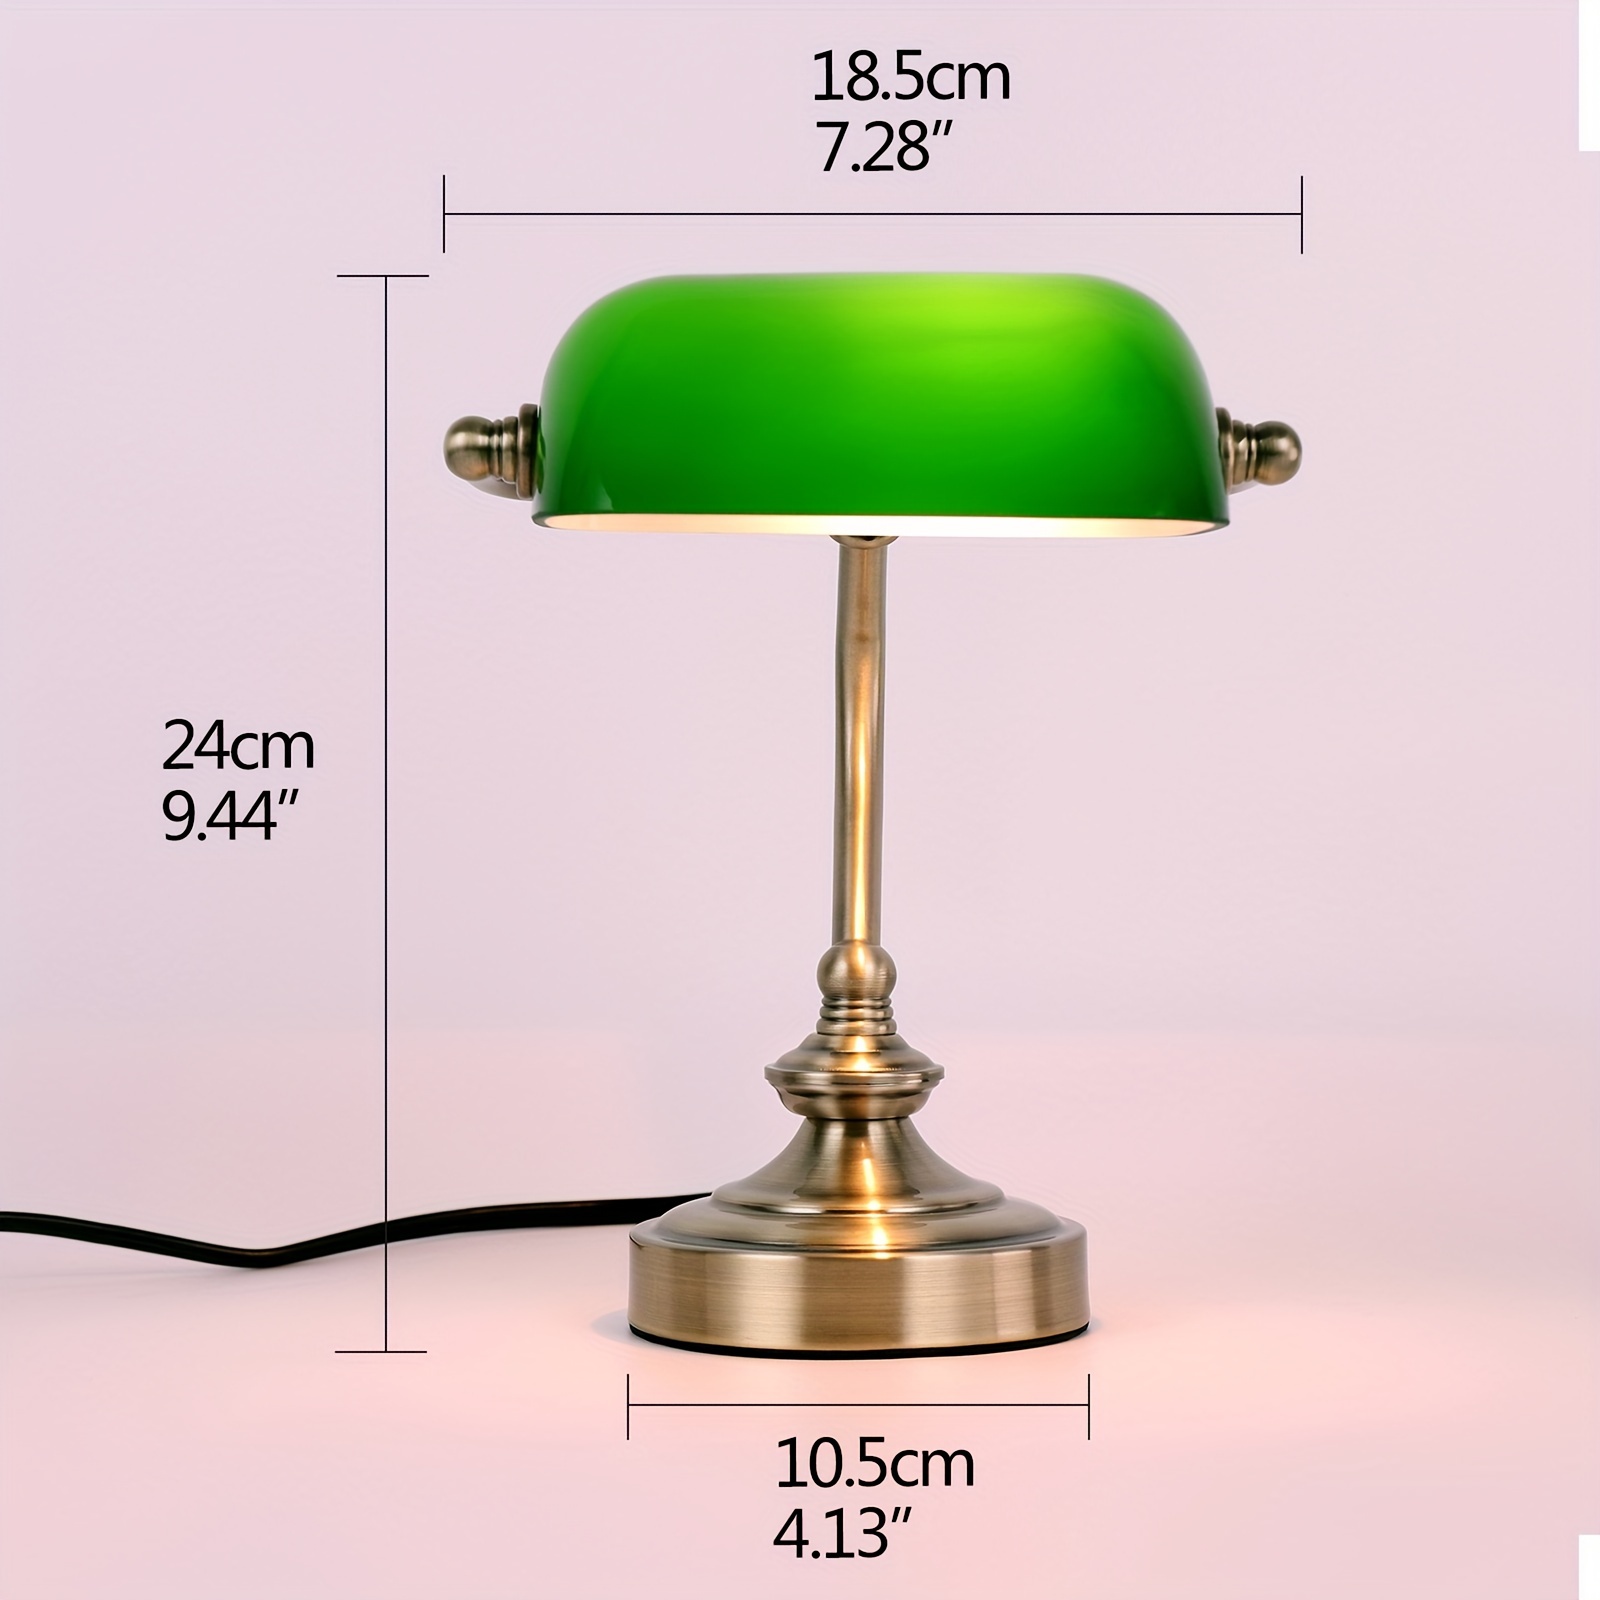 Bankers Desk Lamp Vintage Table Lighting Fixture Green/yellow